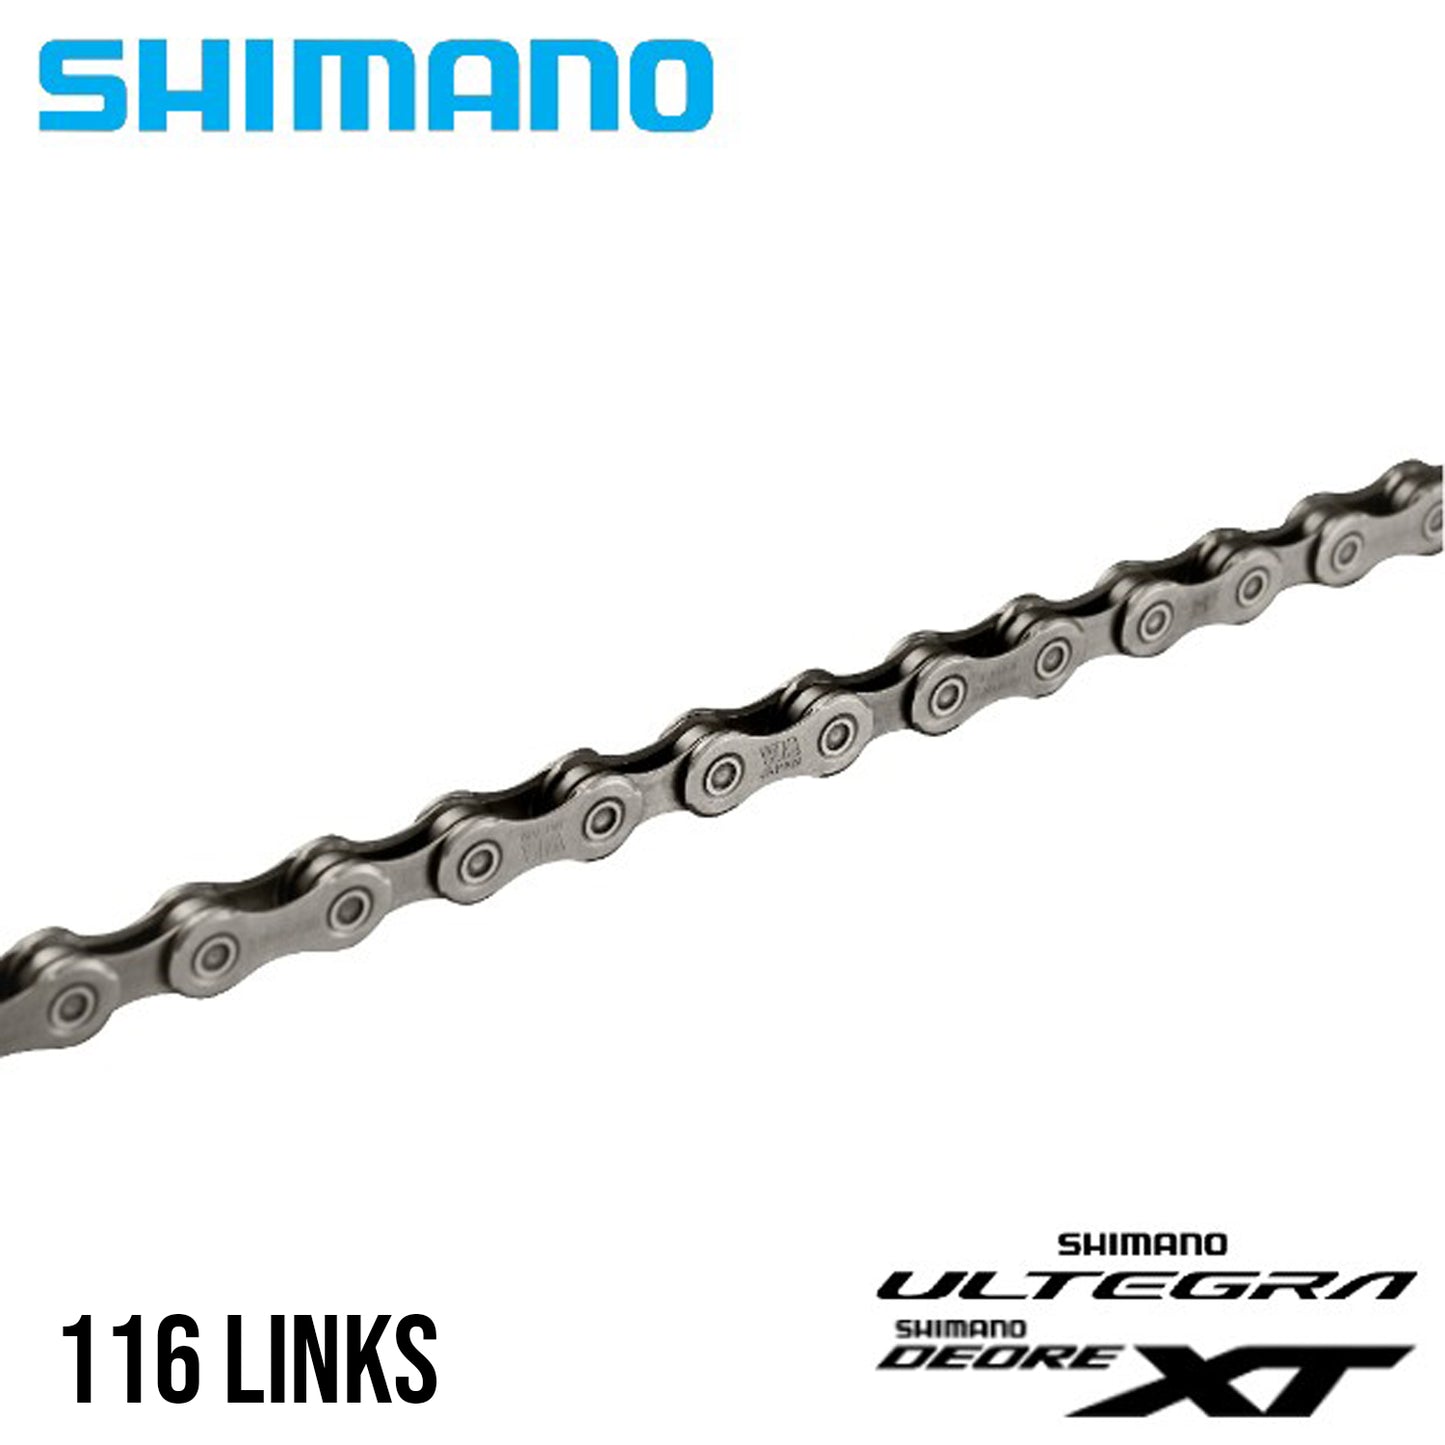 Shimano XT / Ultegra CN-HG701 11-Speed Bike Chain